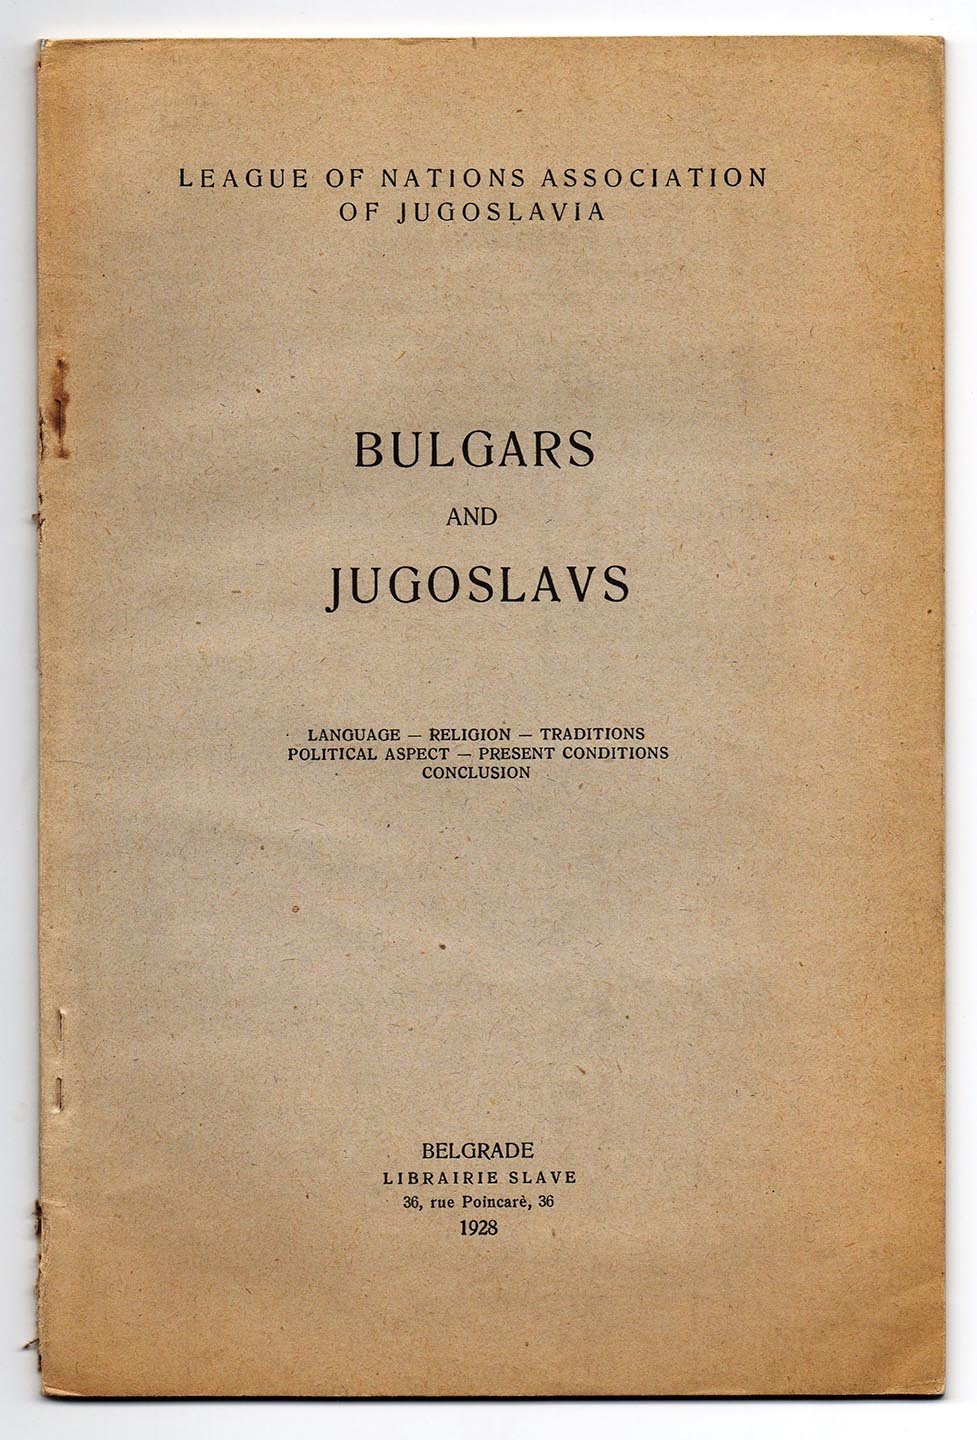 Bulgars and Jugoslavs: Language-Religion-Traditions-Political Aspect-Present Conditions-Conclusion